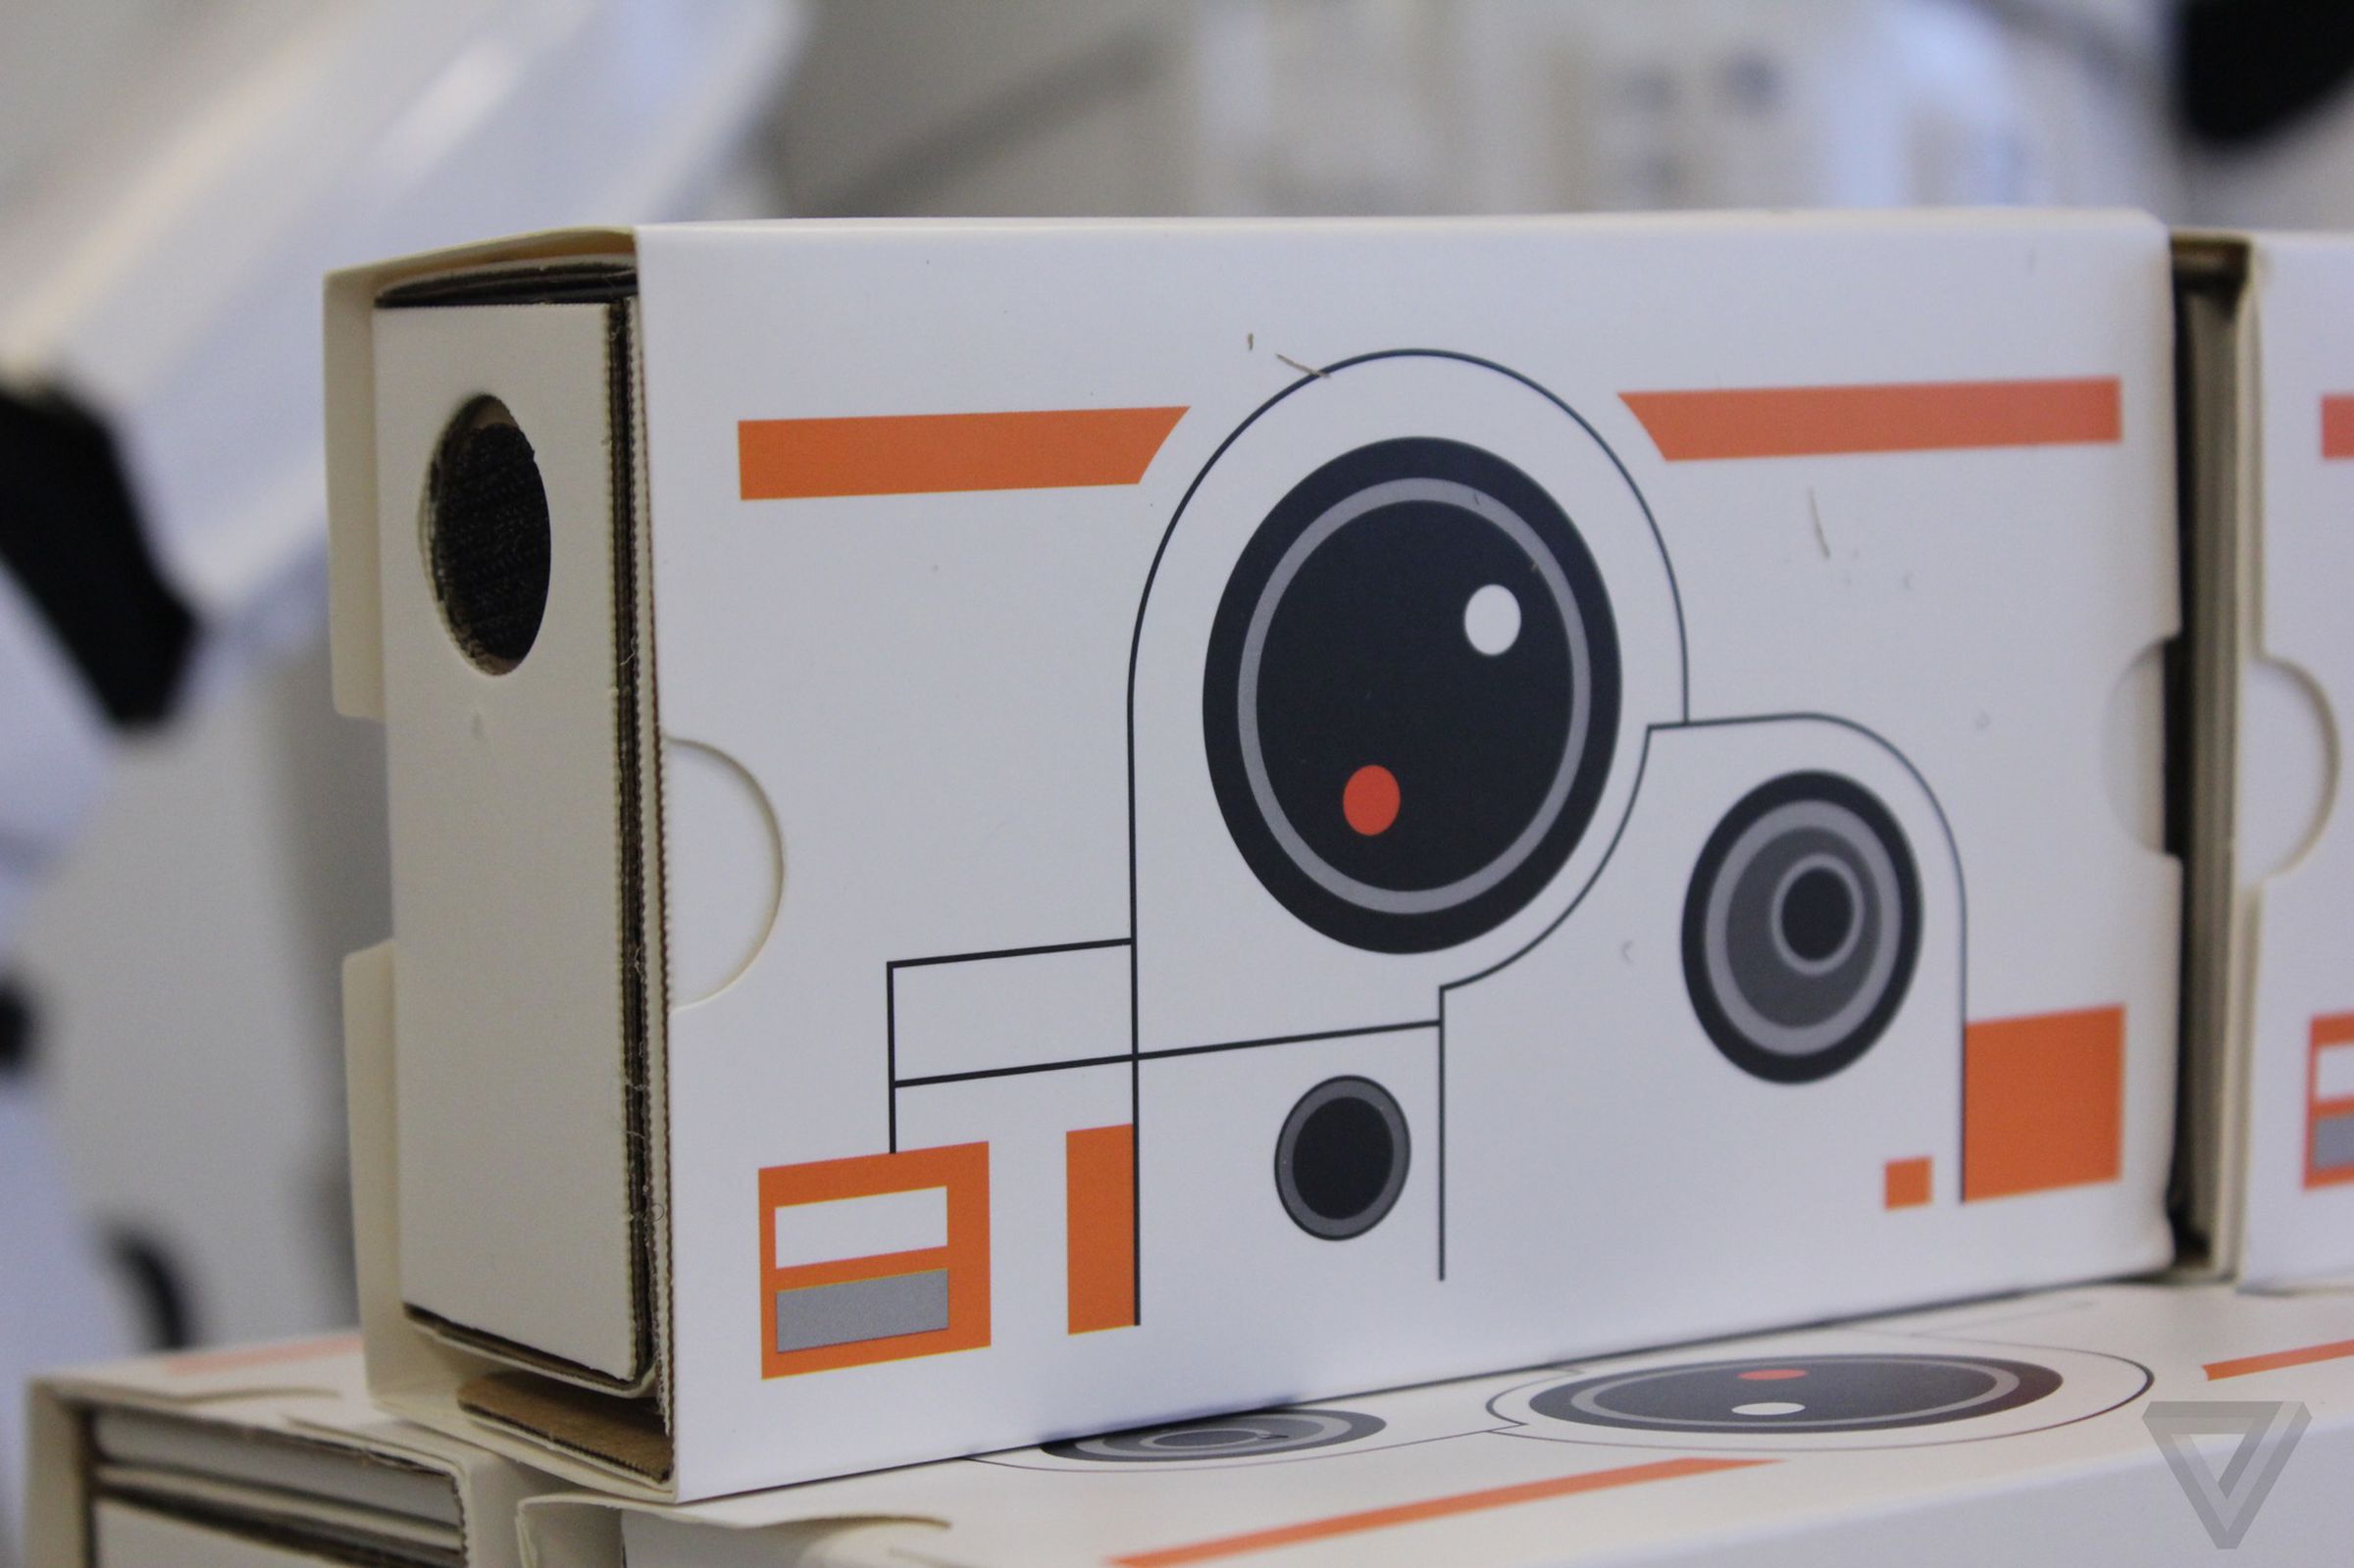 Star Wars Google Cardboard headsets